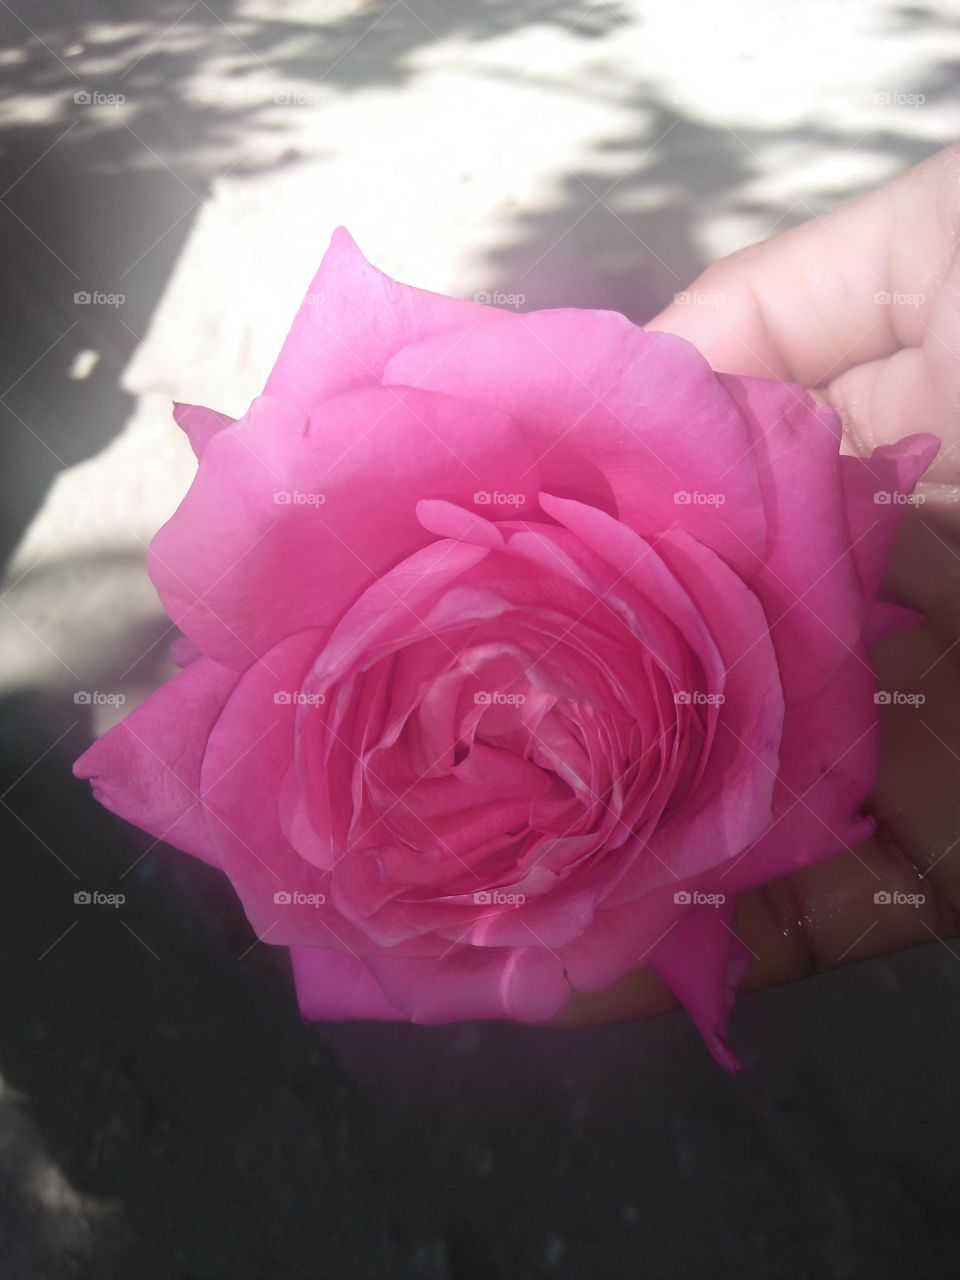 A beautiful pink Rose